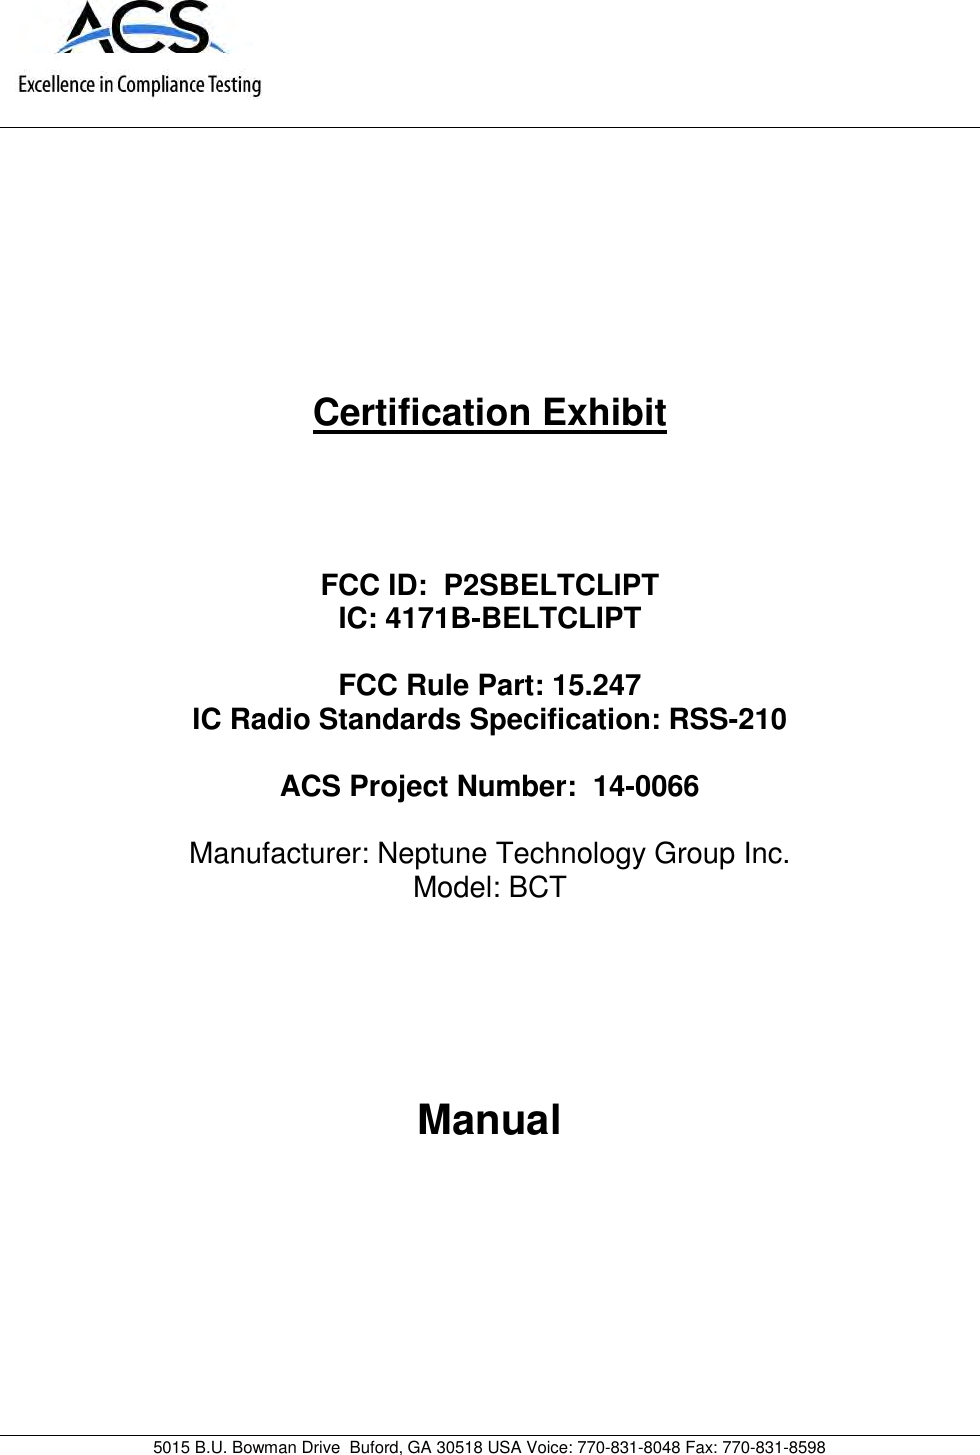 5015 B.U. Bowman Drive Buford, GA 30518 USA Voice: 770-831-8048 Fax: 770-831-8598Certification ExhibitFCC ID: P2SBELTCLIPTIC: 4171B-BELTCLIPTFCC Rule Part: 15.247IC Radio Standards Specification: RSS-210ACS Project Number: 14-0066Manufacturer: Neptune Technology Group Inc.Model: BCTManual